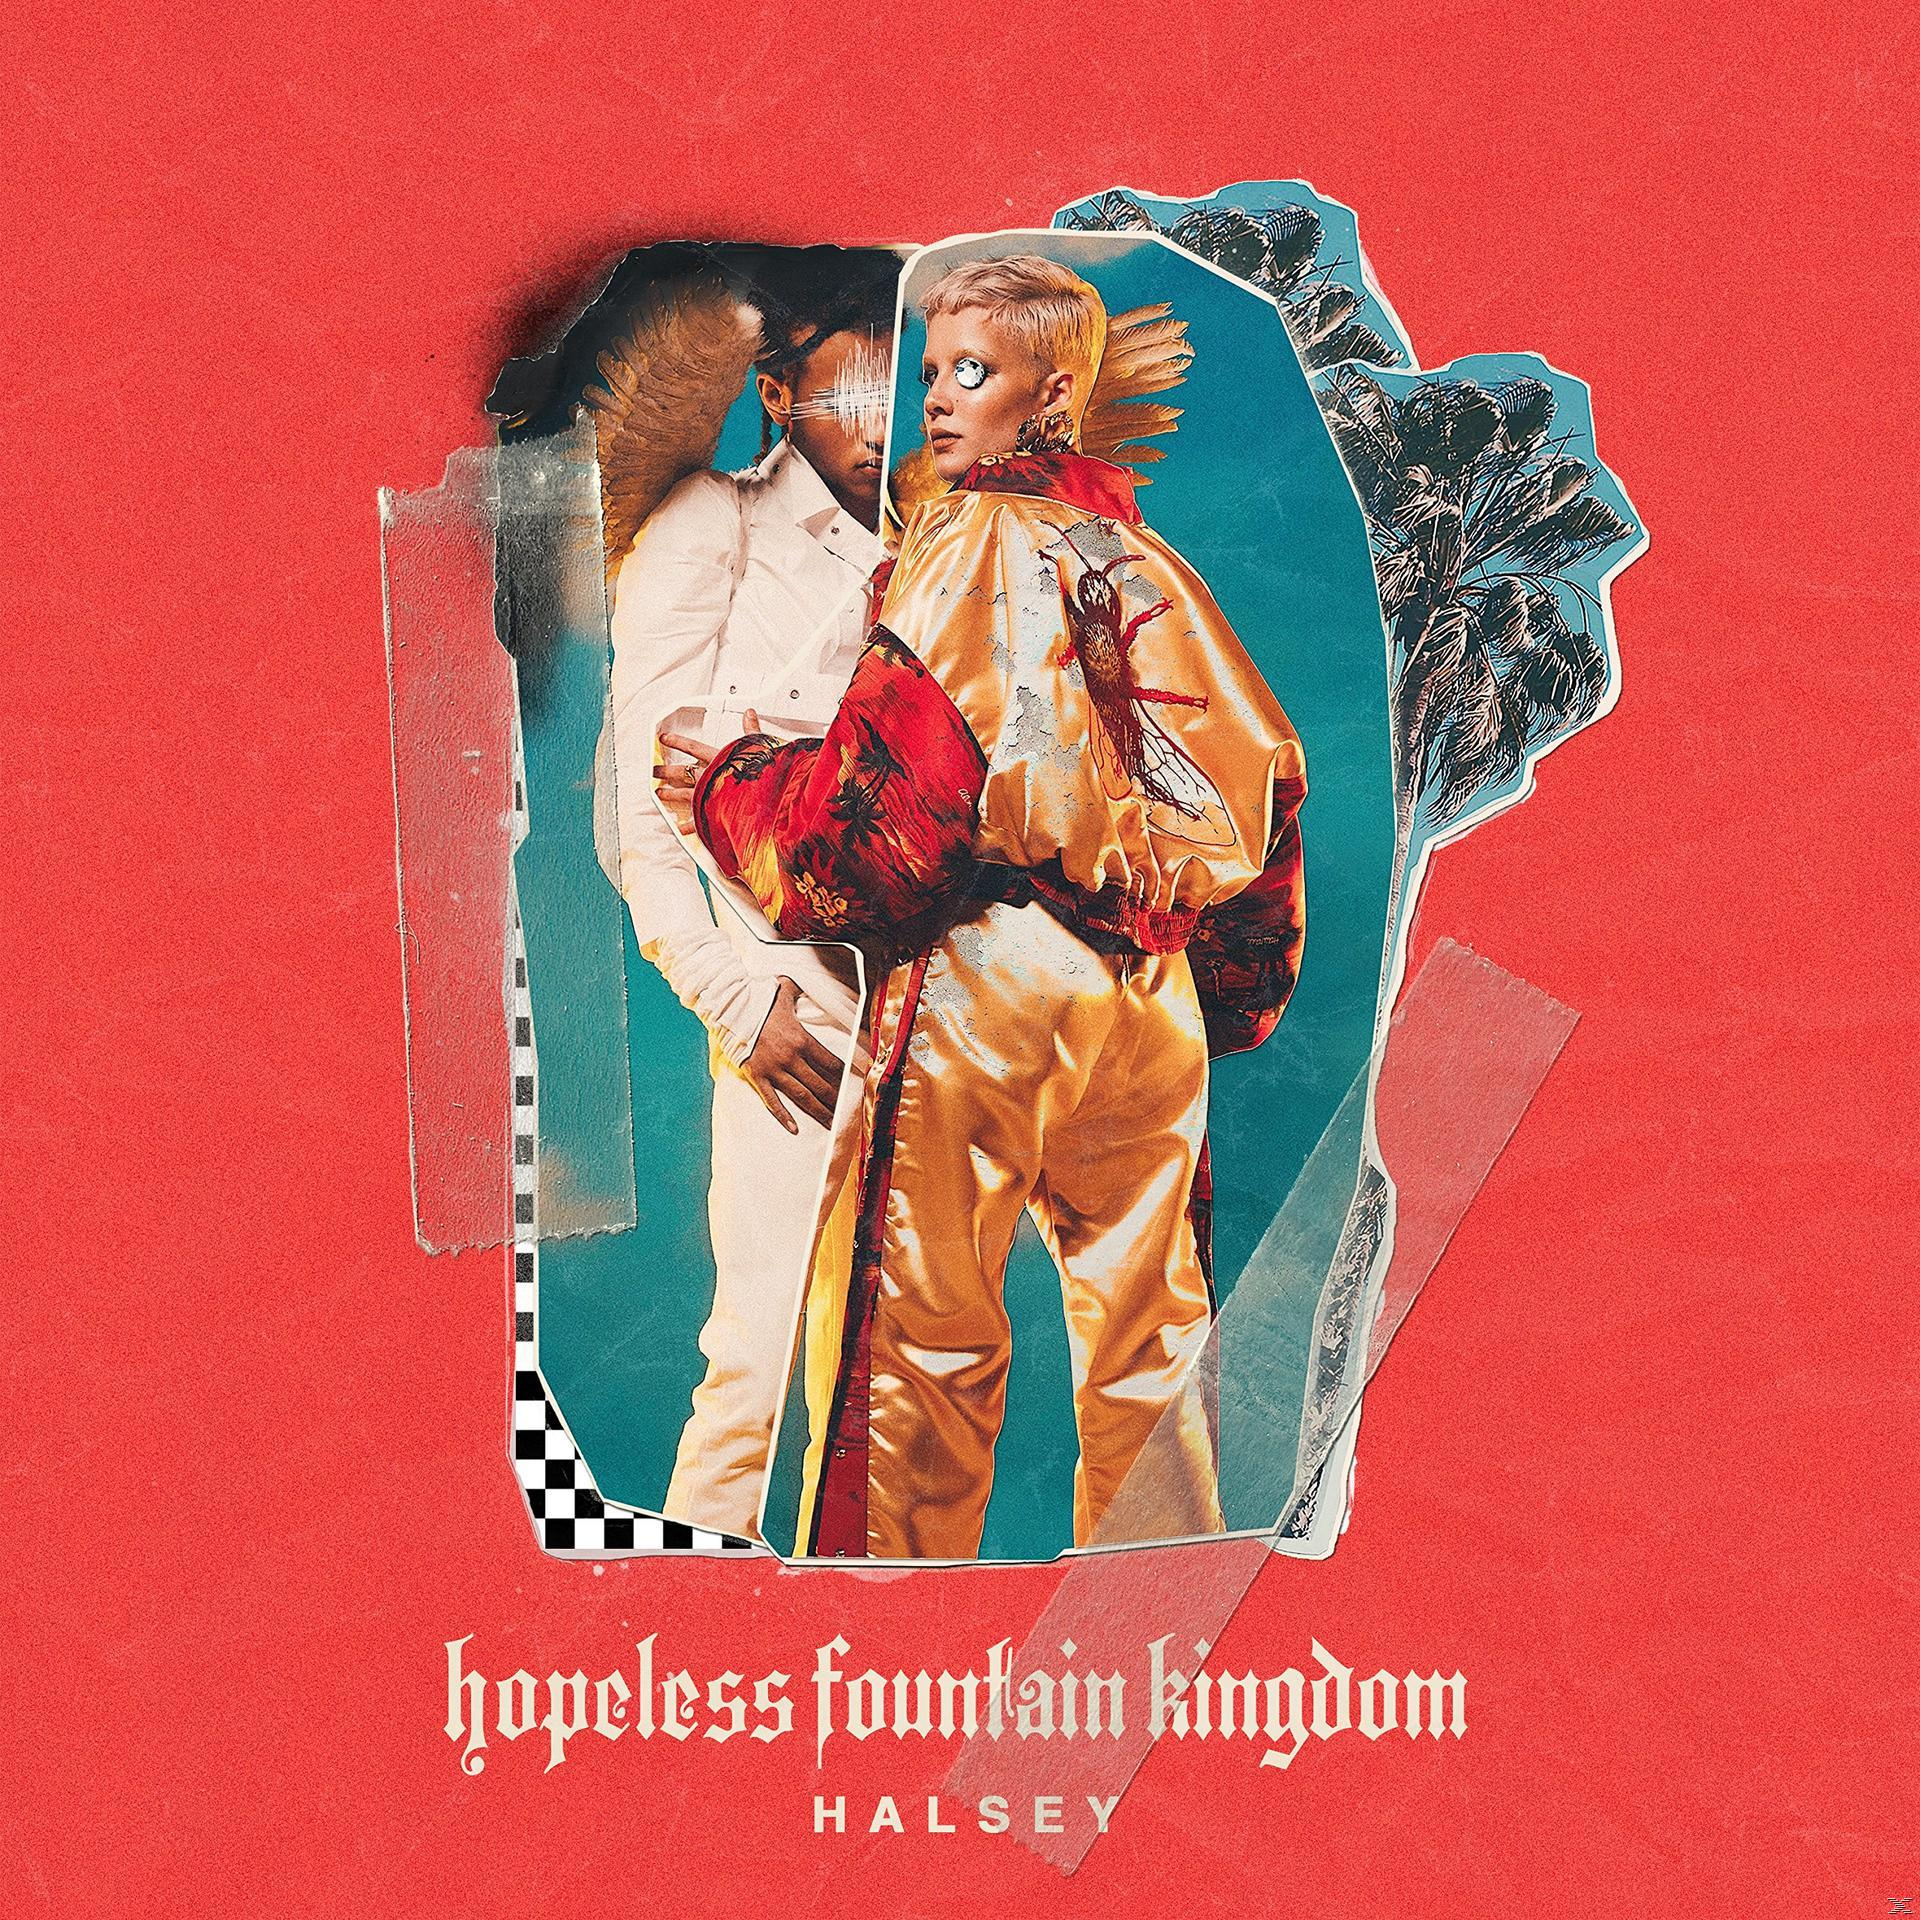 Halsey - Hopeless Edition) (CD) - (Deluxe Kingdom Fountain